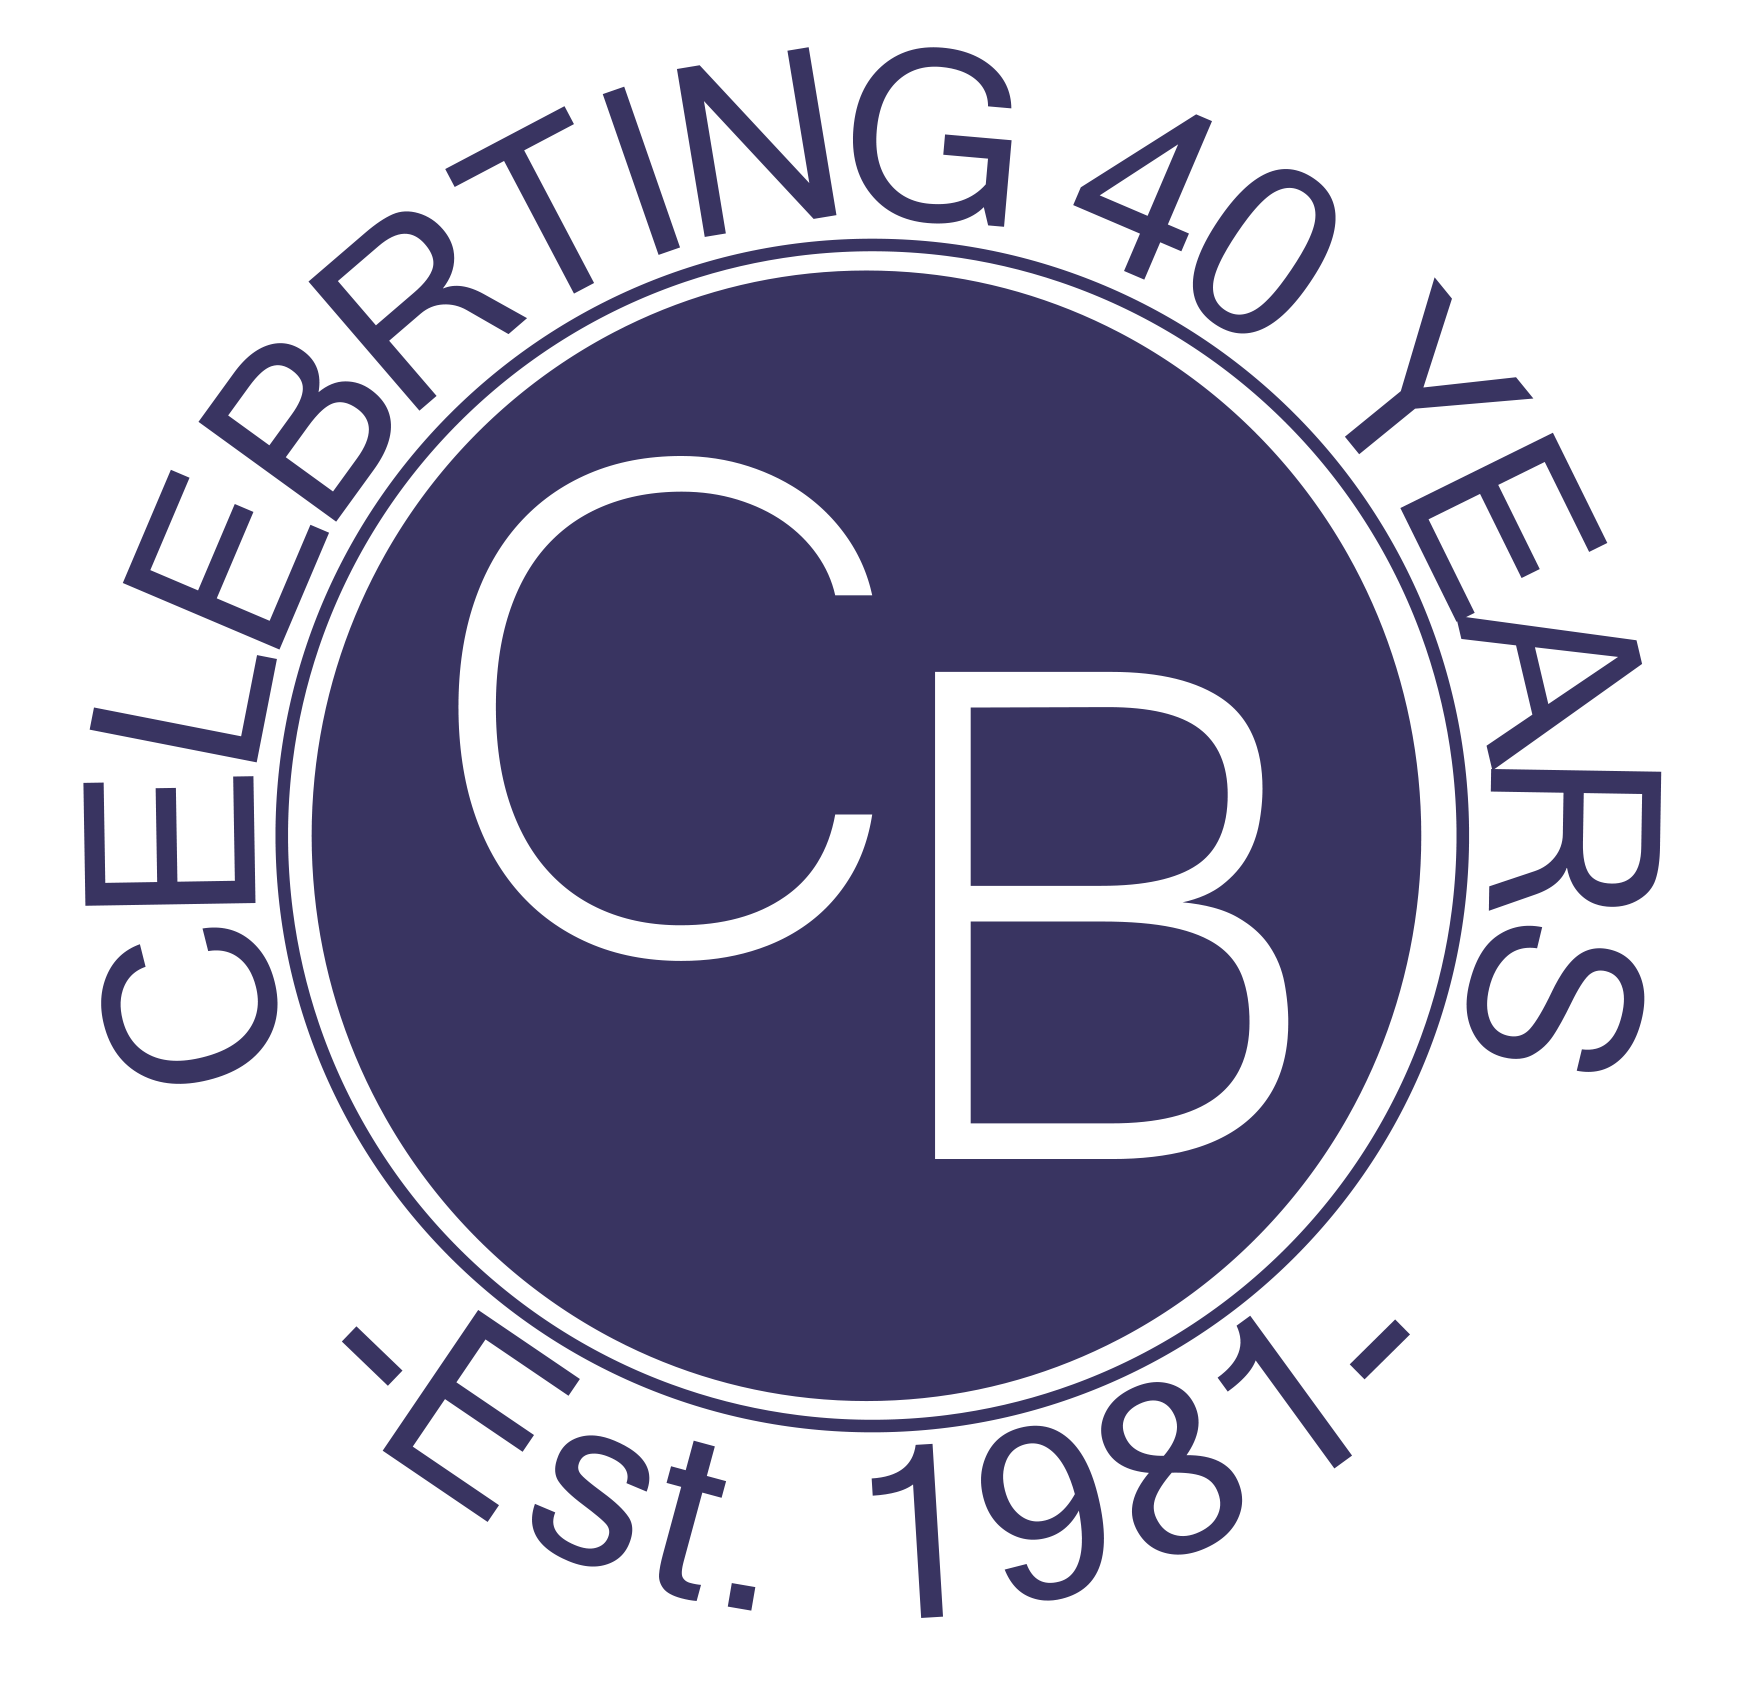 CB 40 Years Logo Final.png